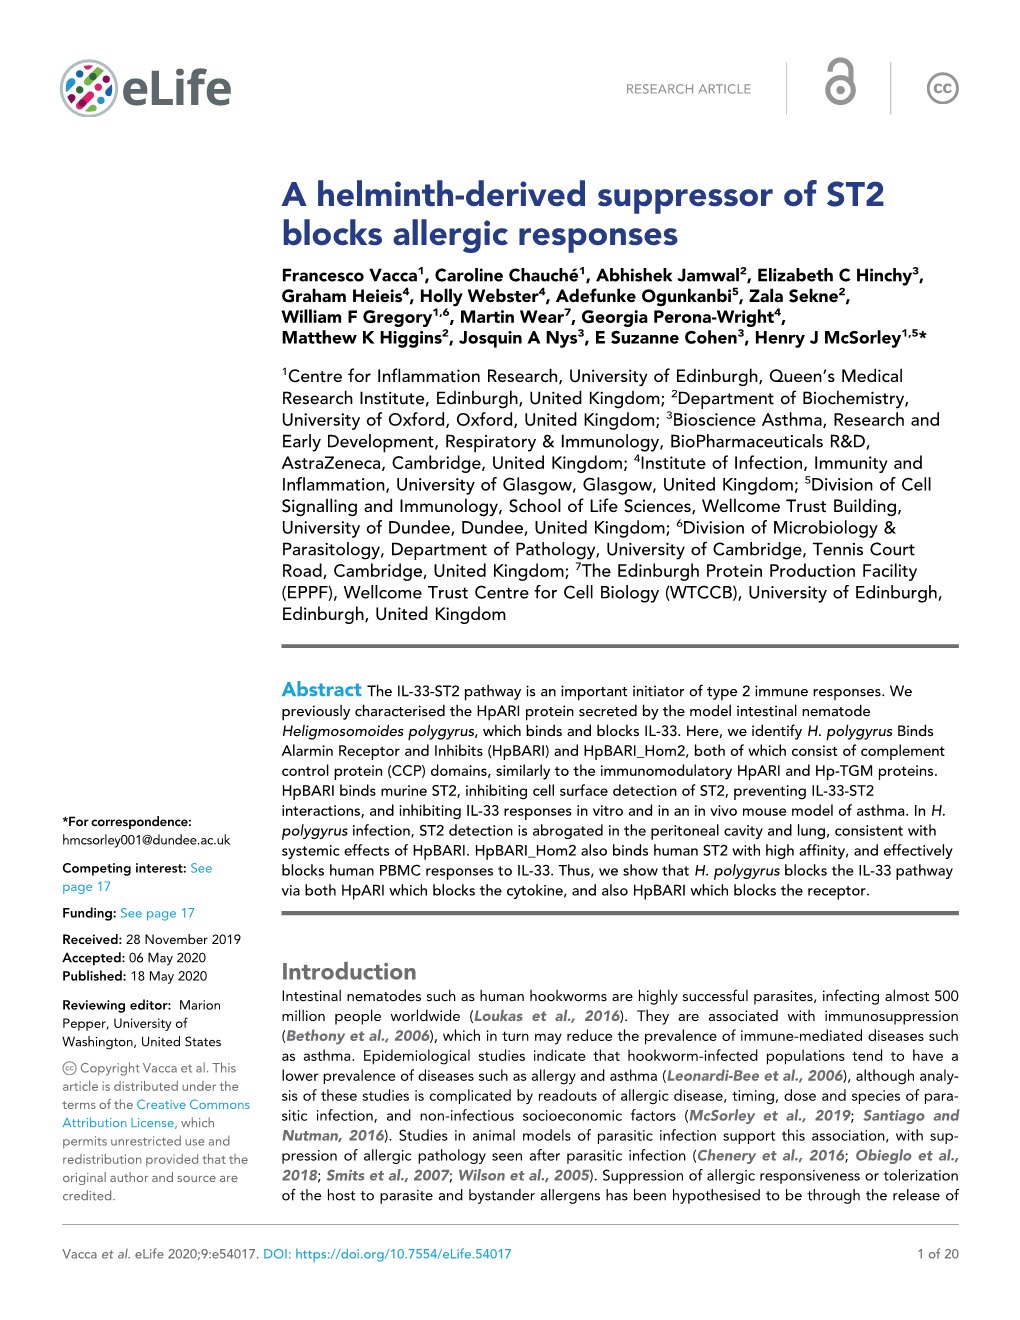 A Helminth-Derived Suppressor of ST2 Blocks Allergic Responses